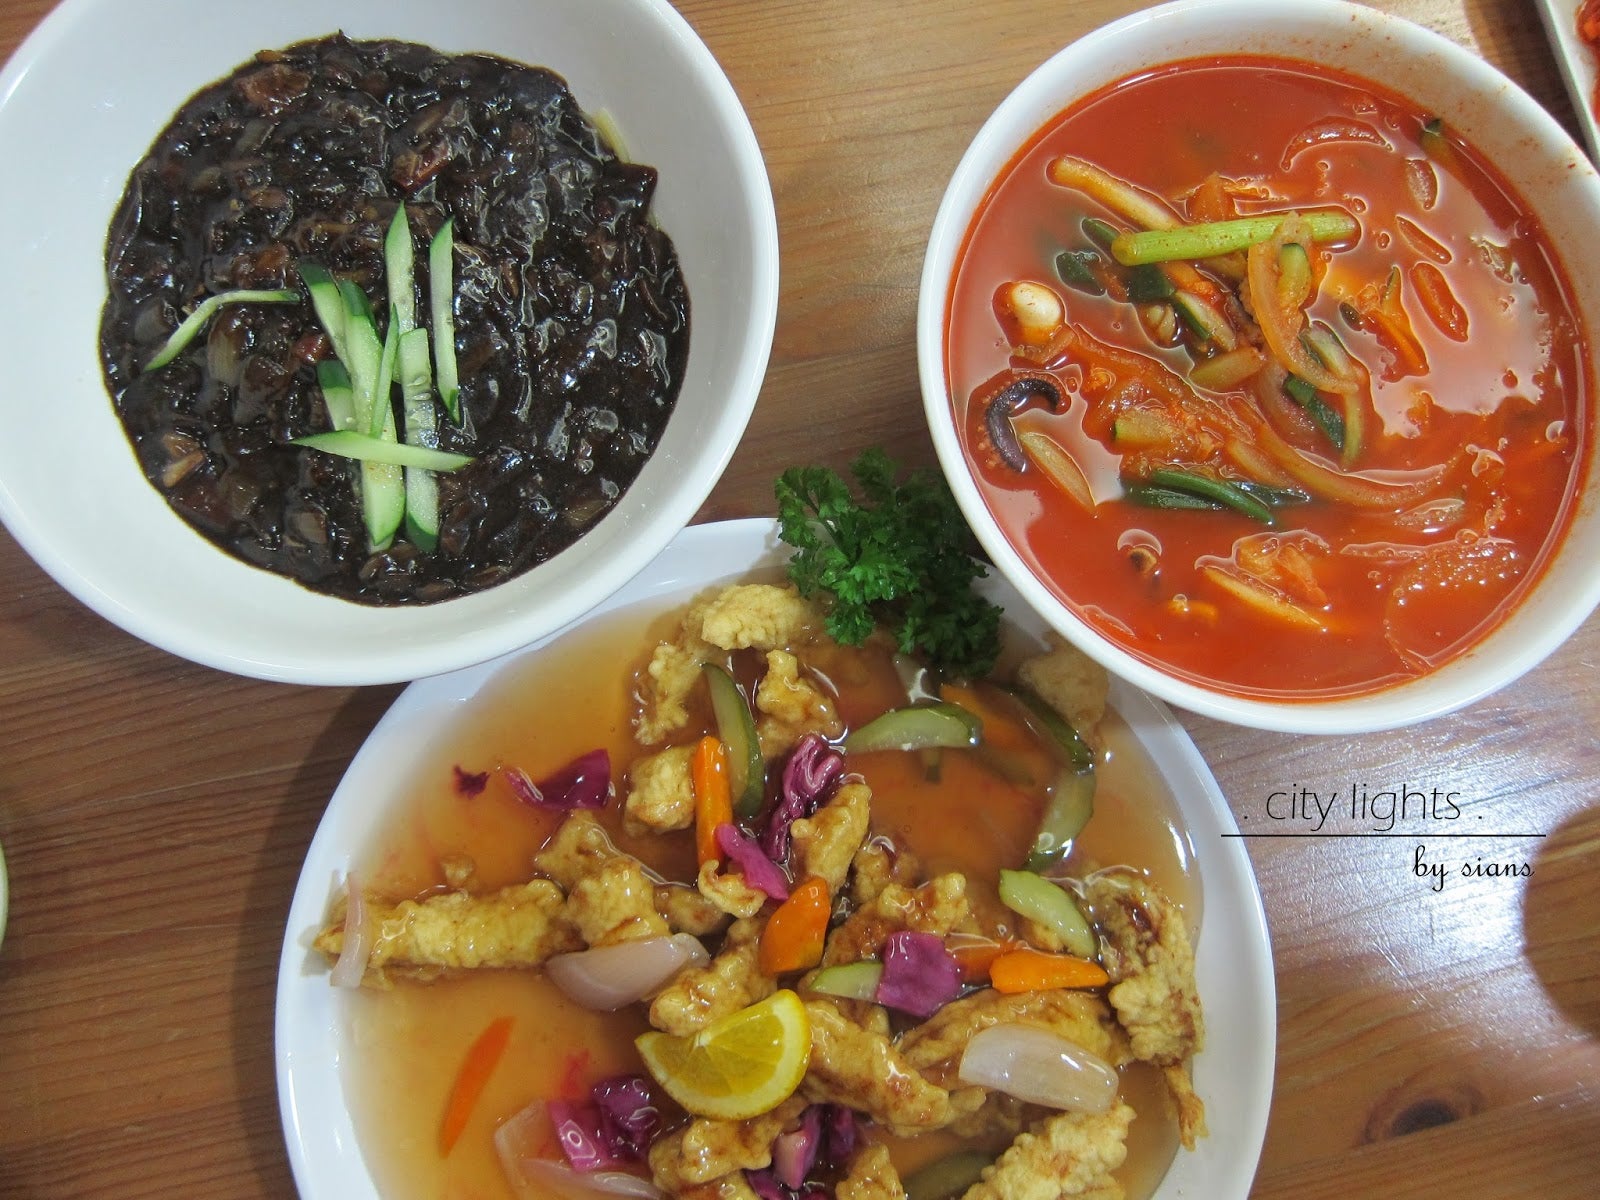 8 Most Authentic Korean Restaurants In Kl - World Of Buzz 4